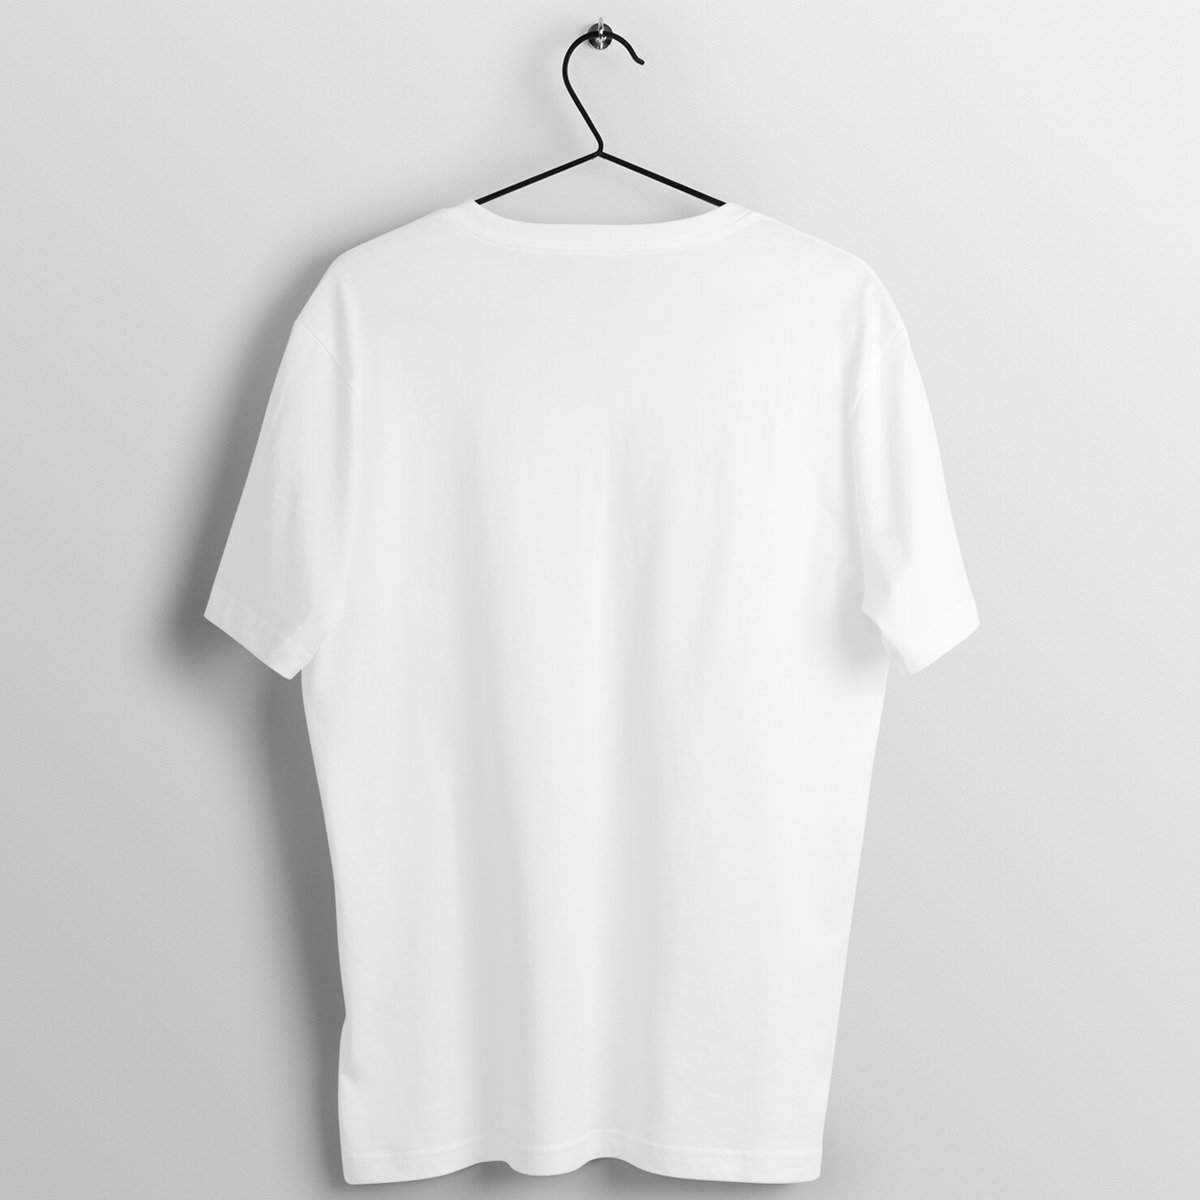 Trenfort Shree Ram T-shirt (Unisex)